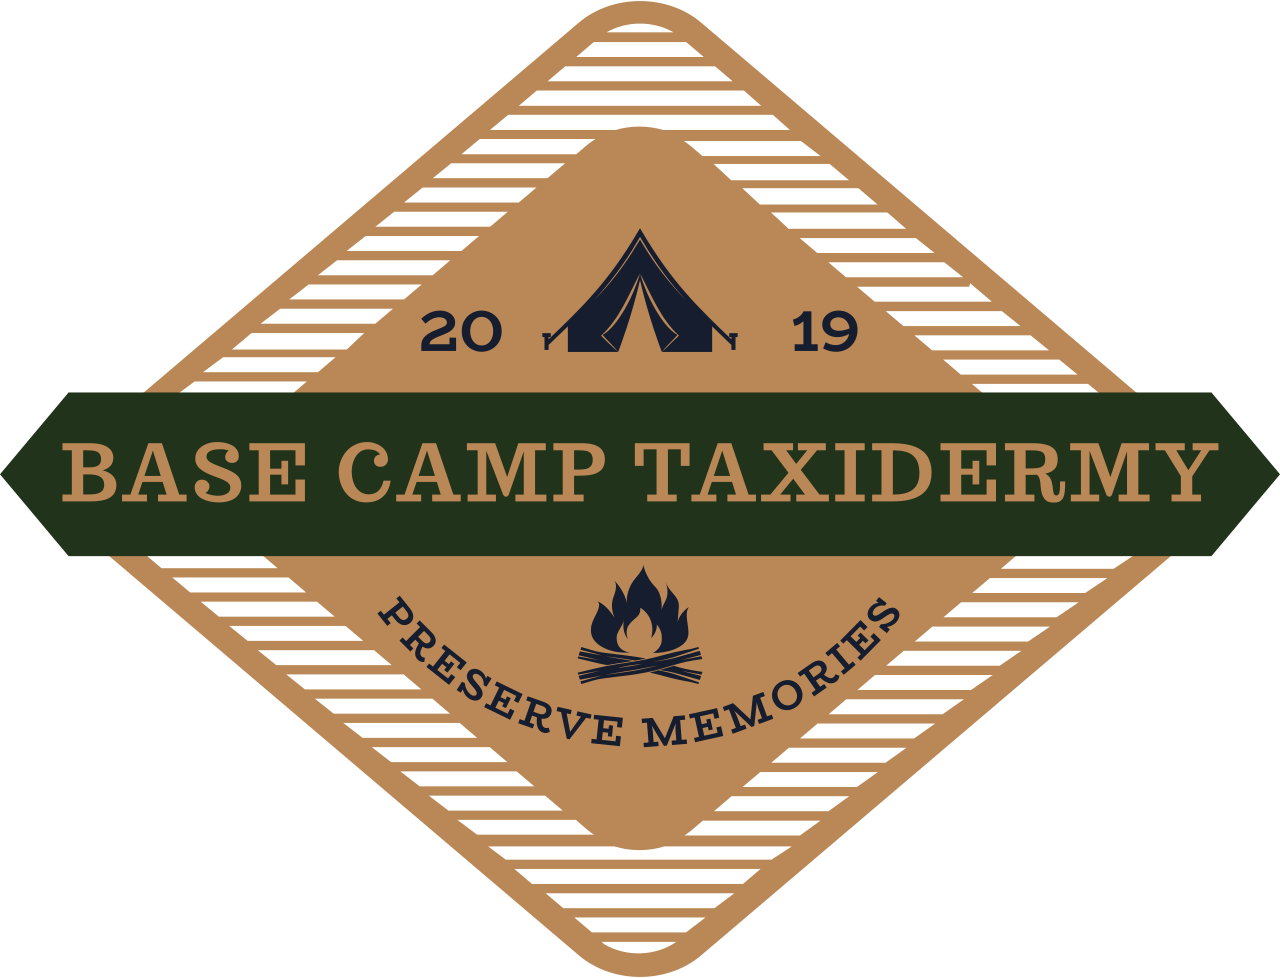 Base Camp Taxidermy's logo